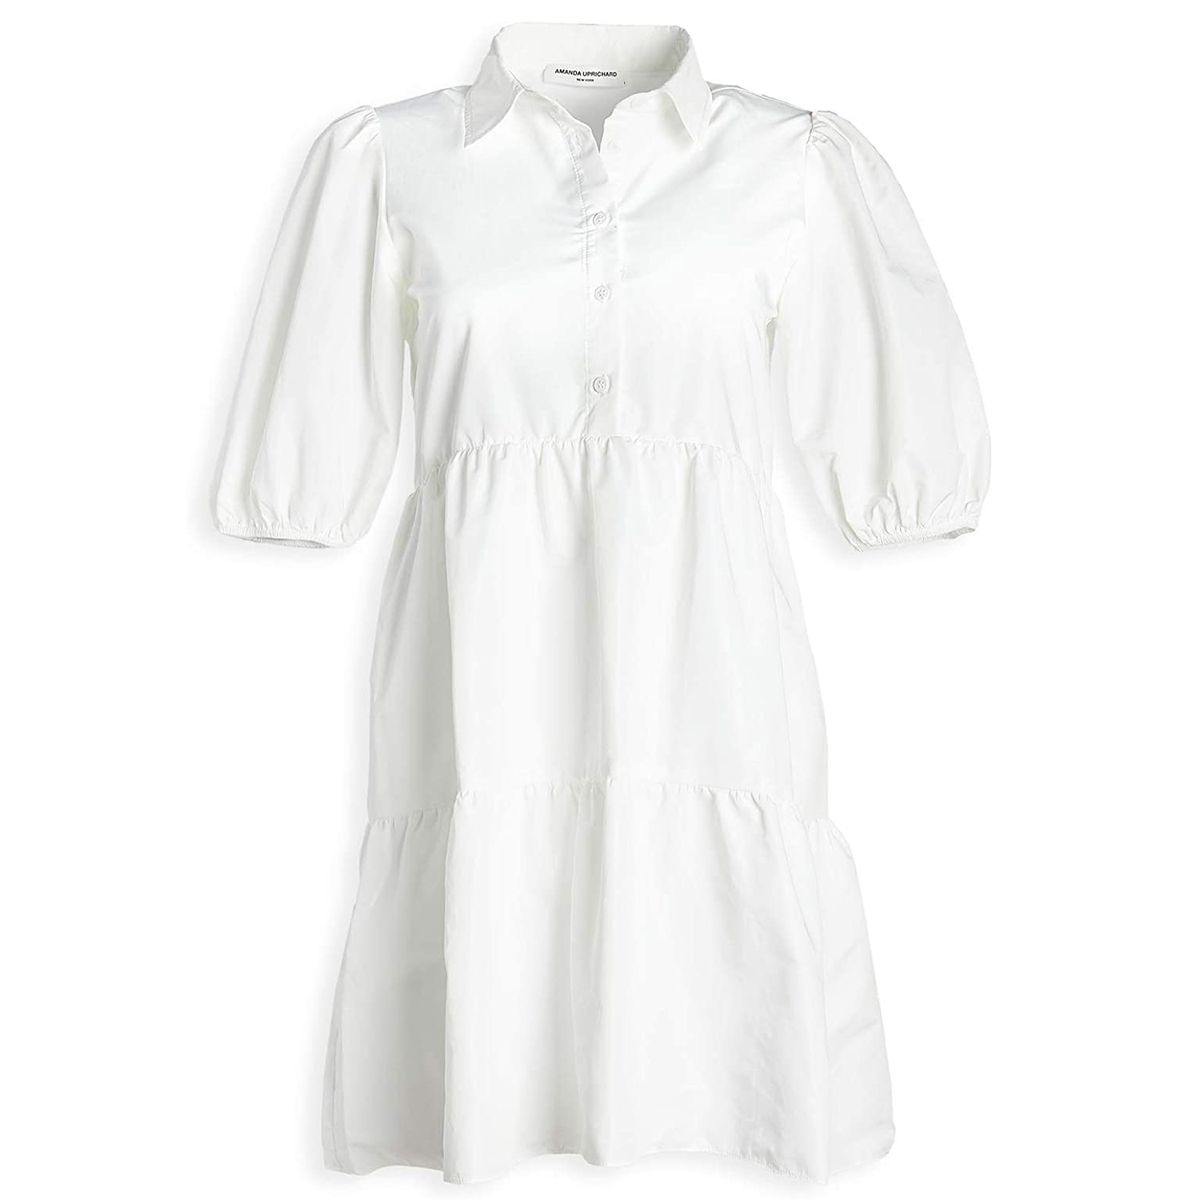 Amal Clooney and Sarah Jessica Parker Love White Drop-Waist Dresses ...